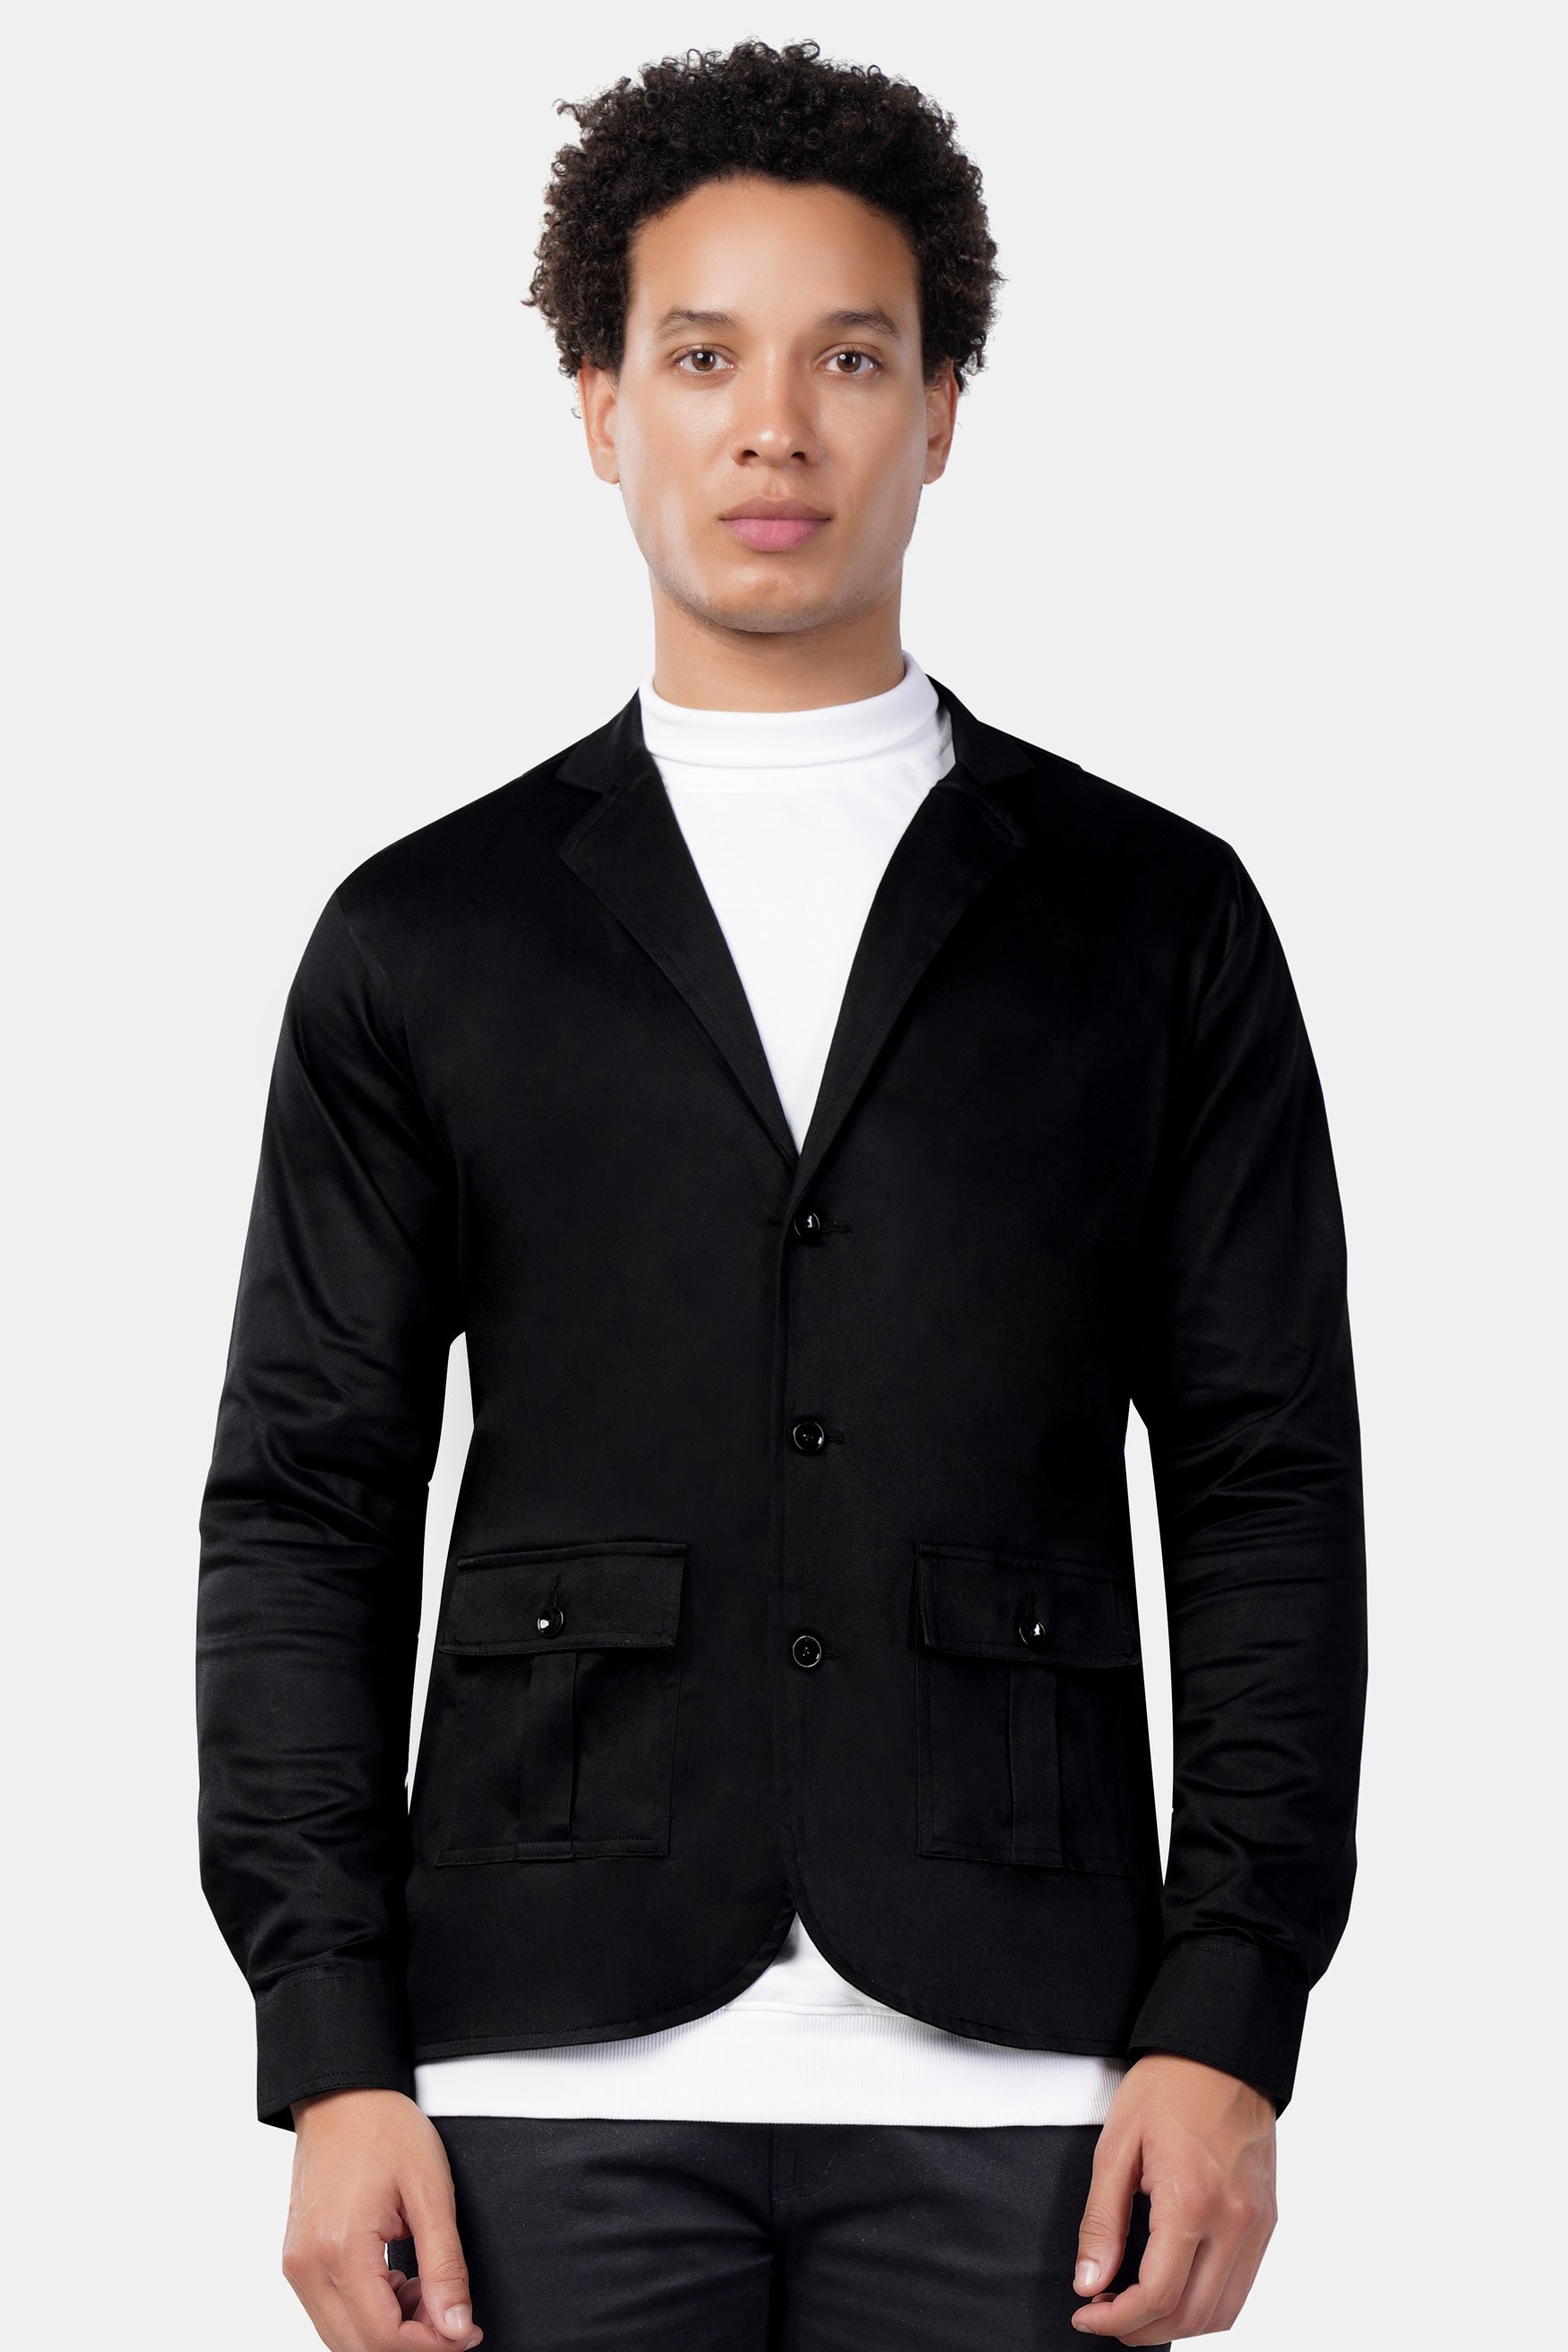 Vulcan Black Premium Cotton Designer Jacket